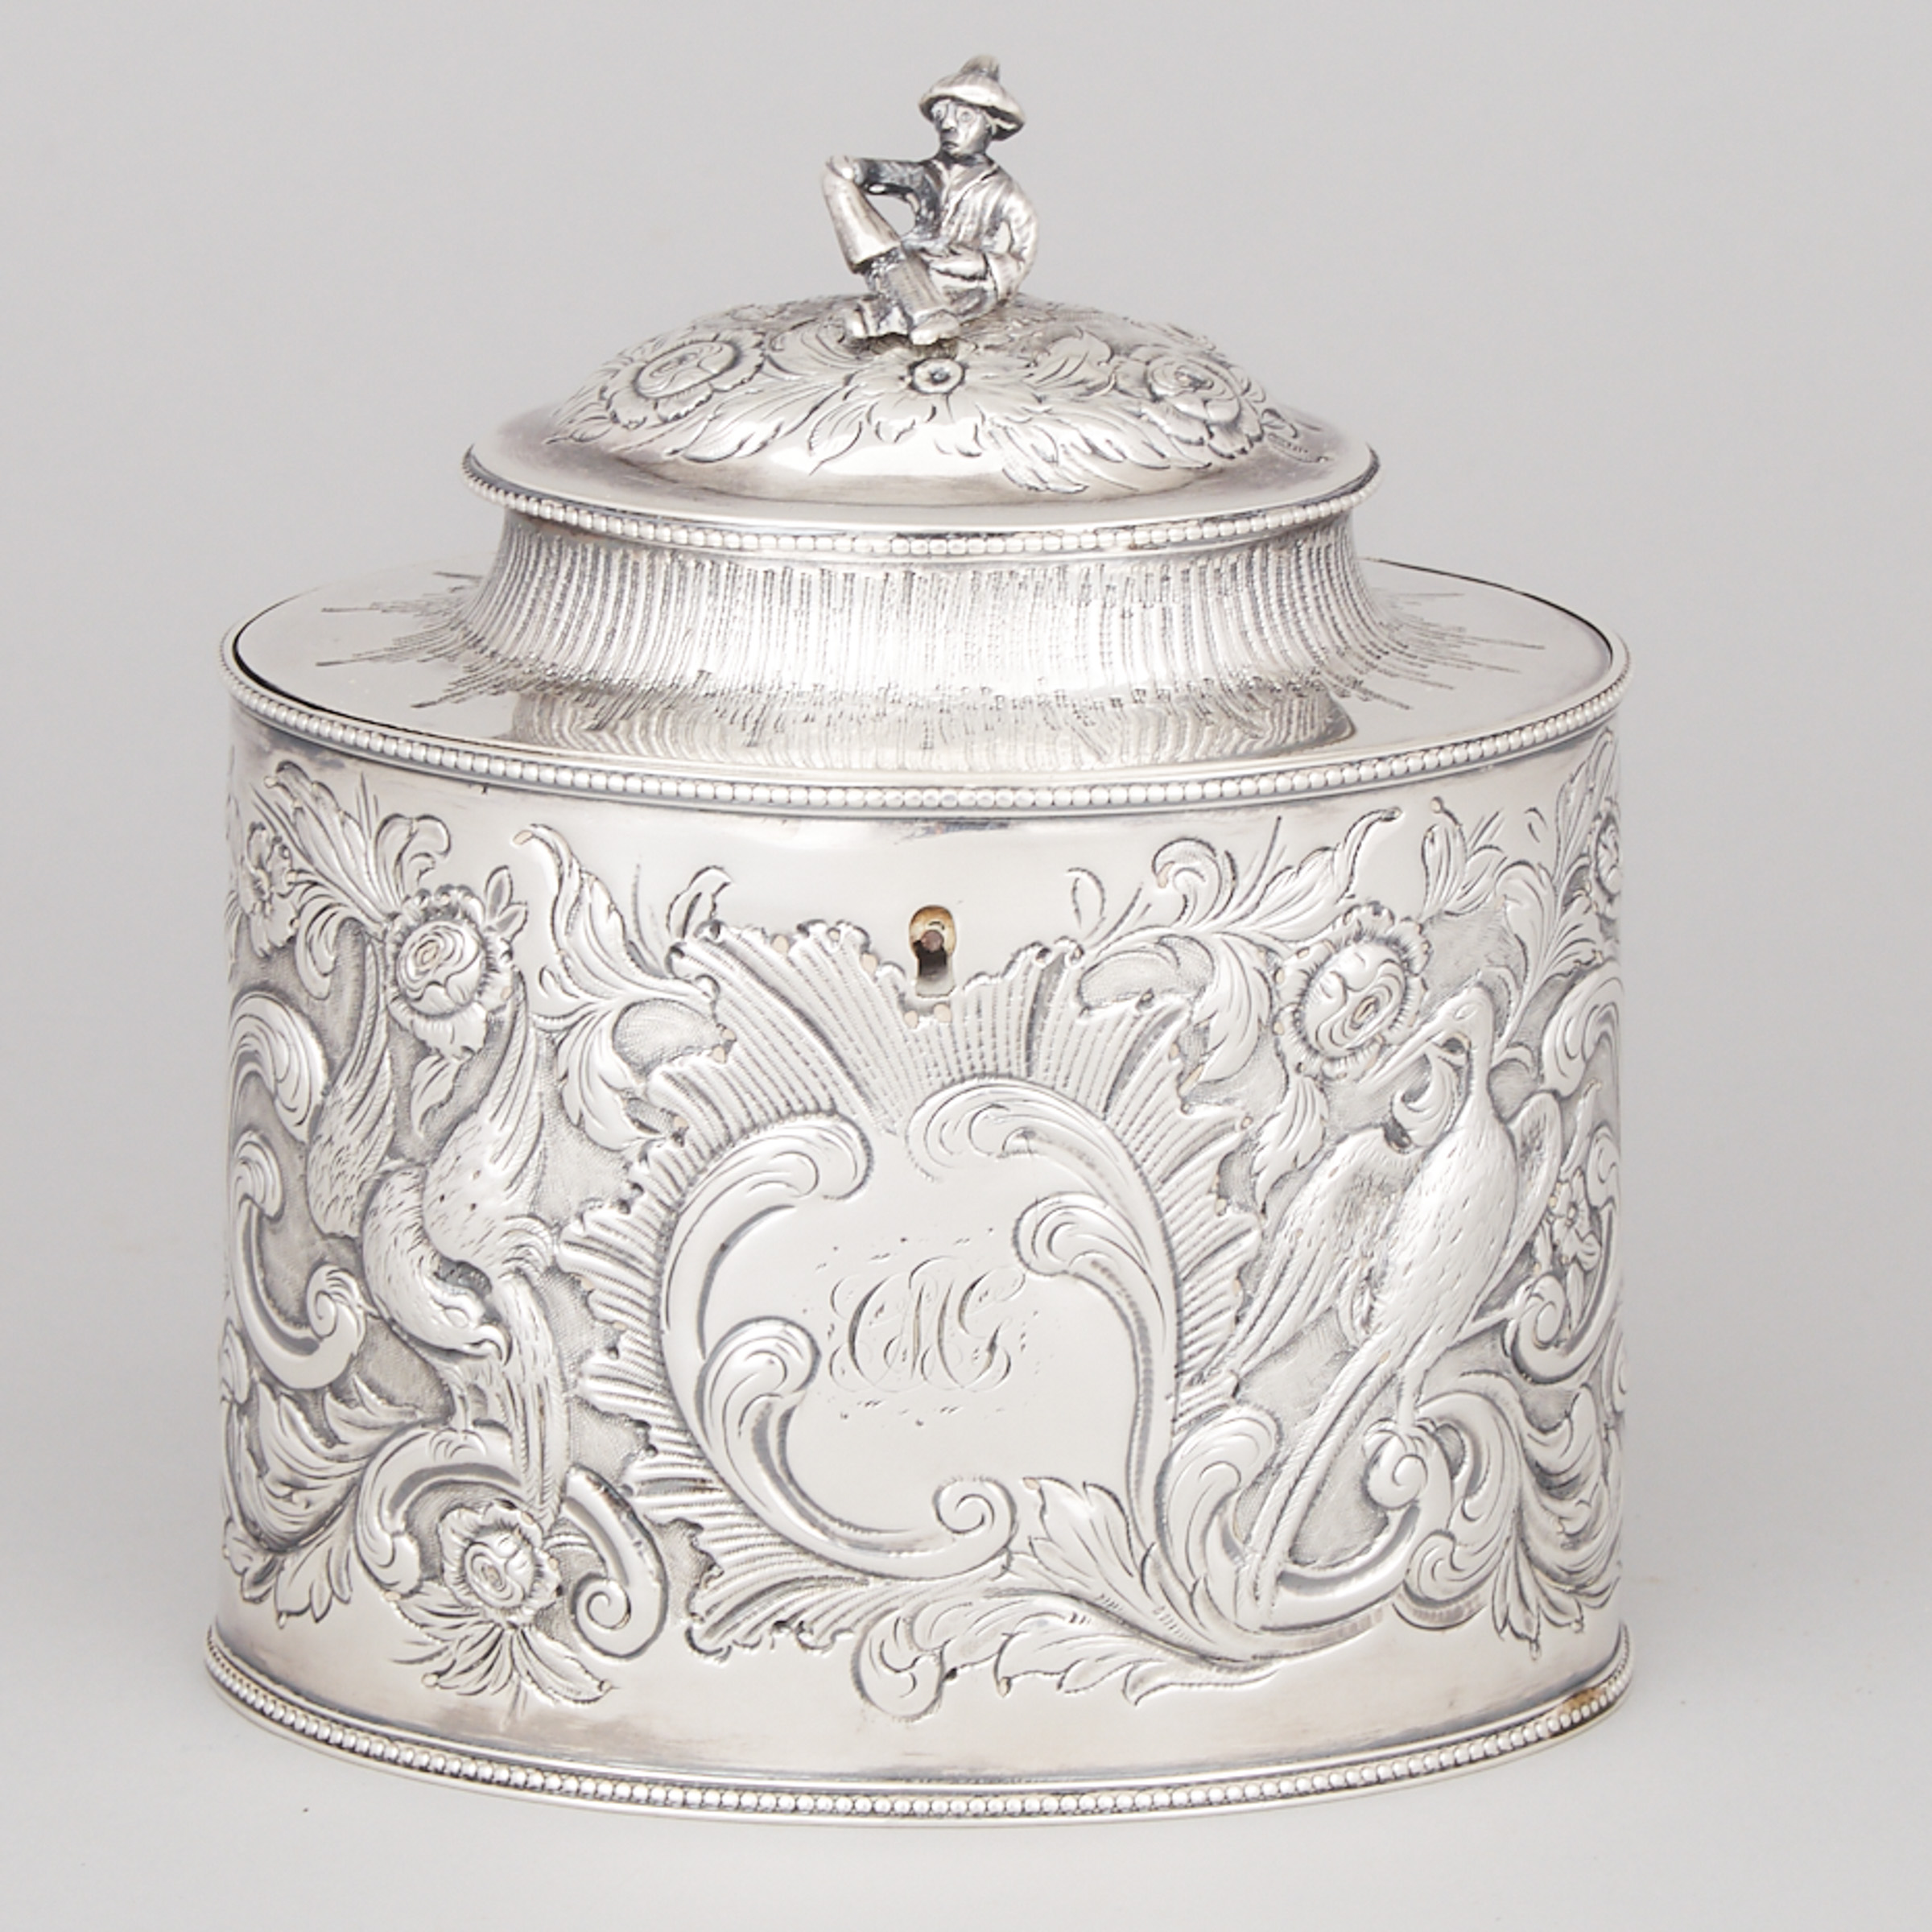 George III Silver Tea Oval Caddy, Miles Askew, London, 1785